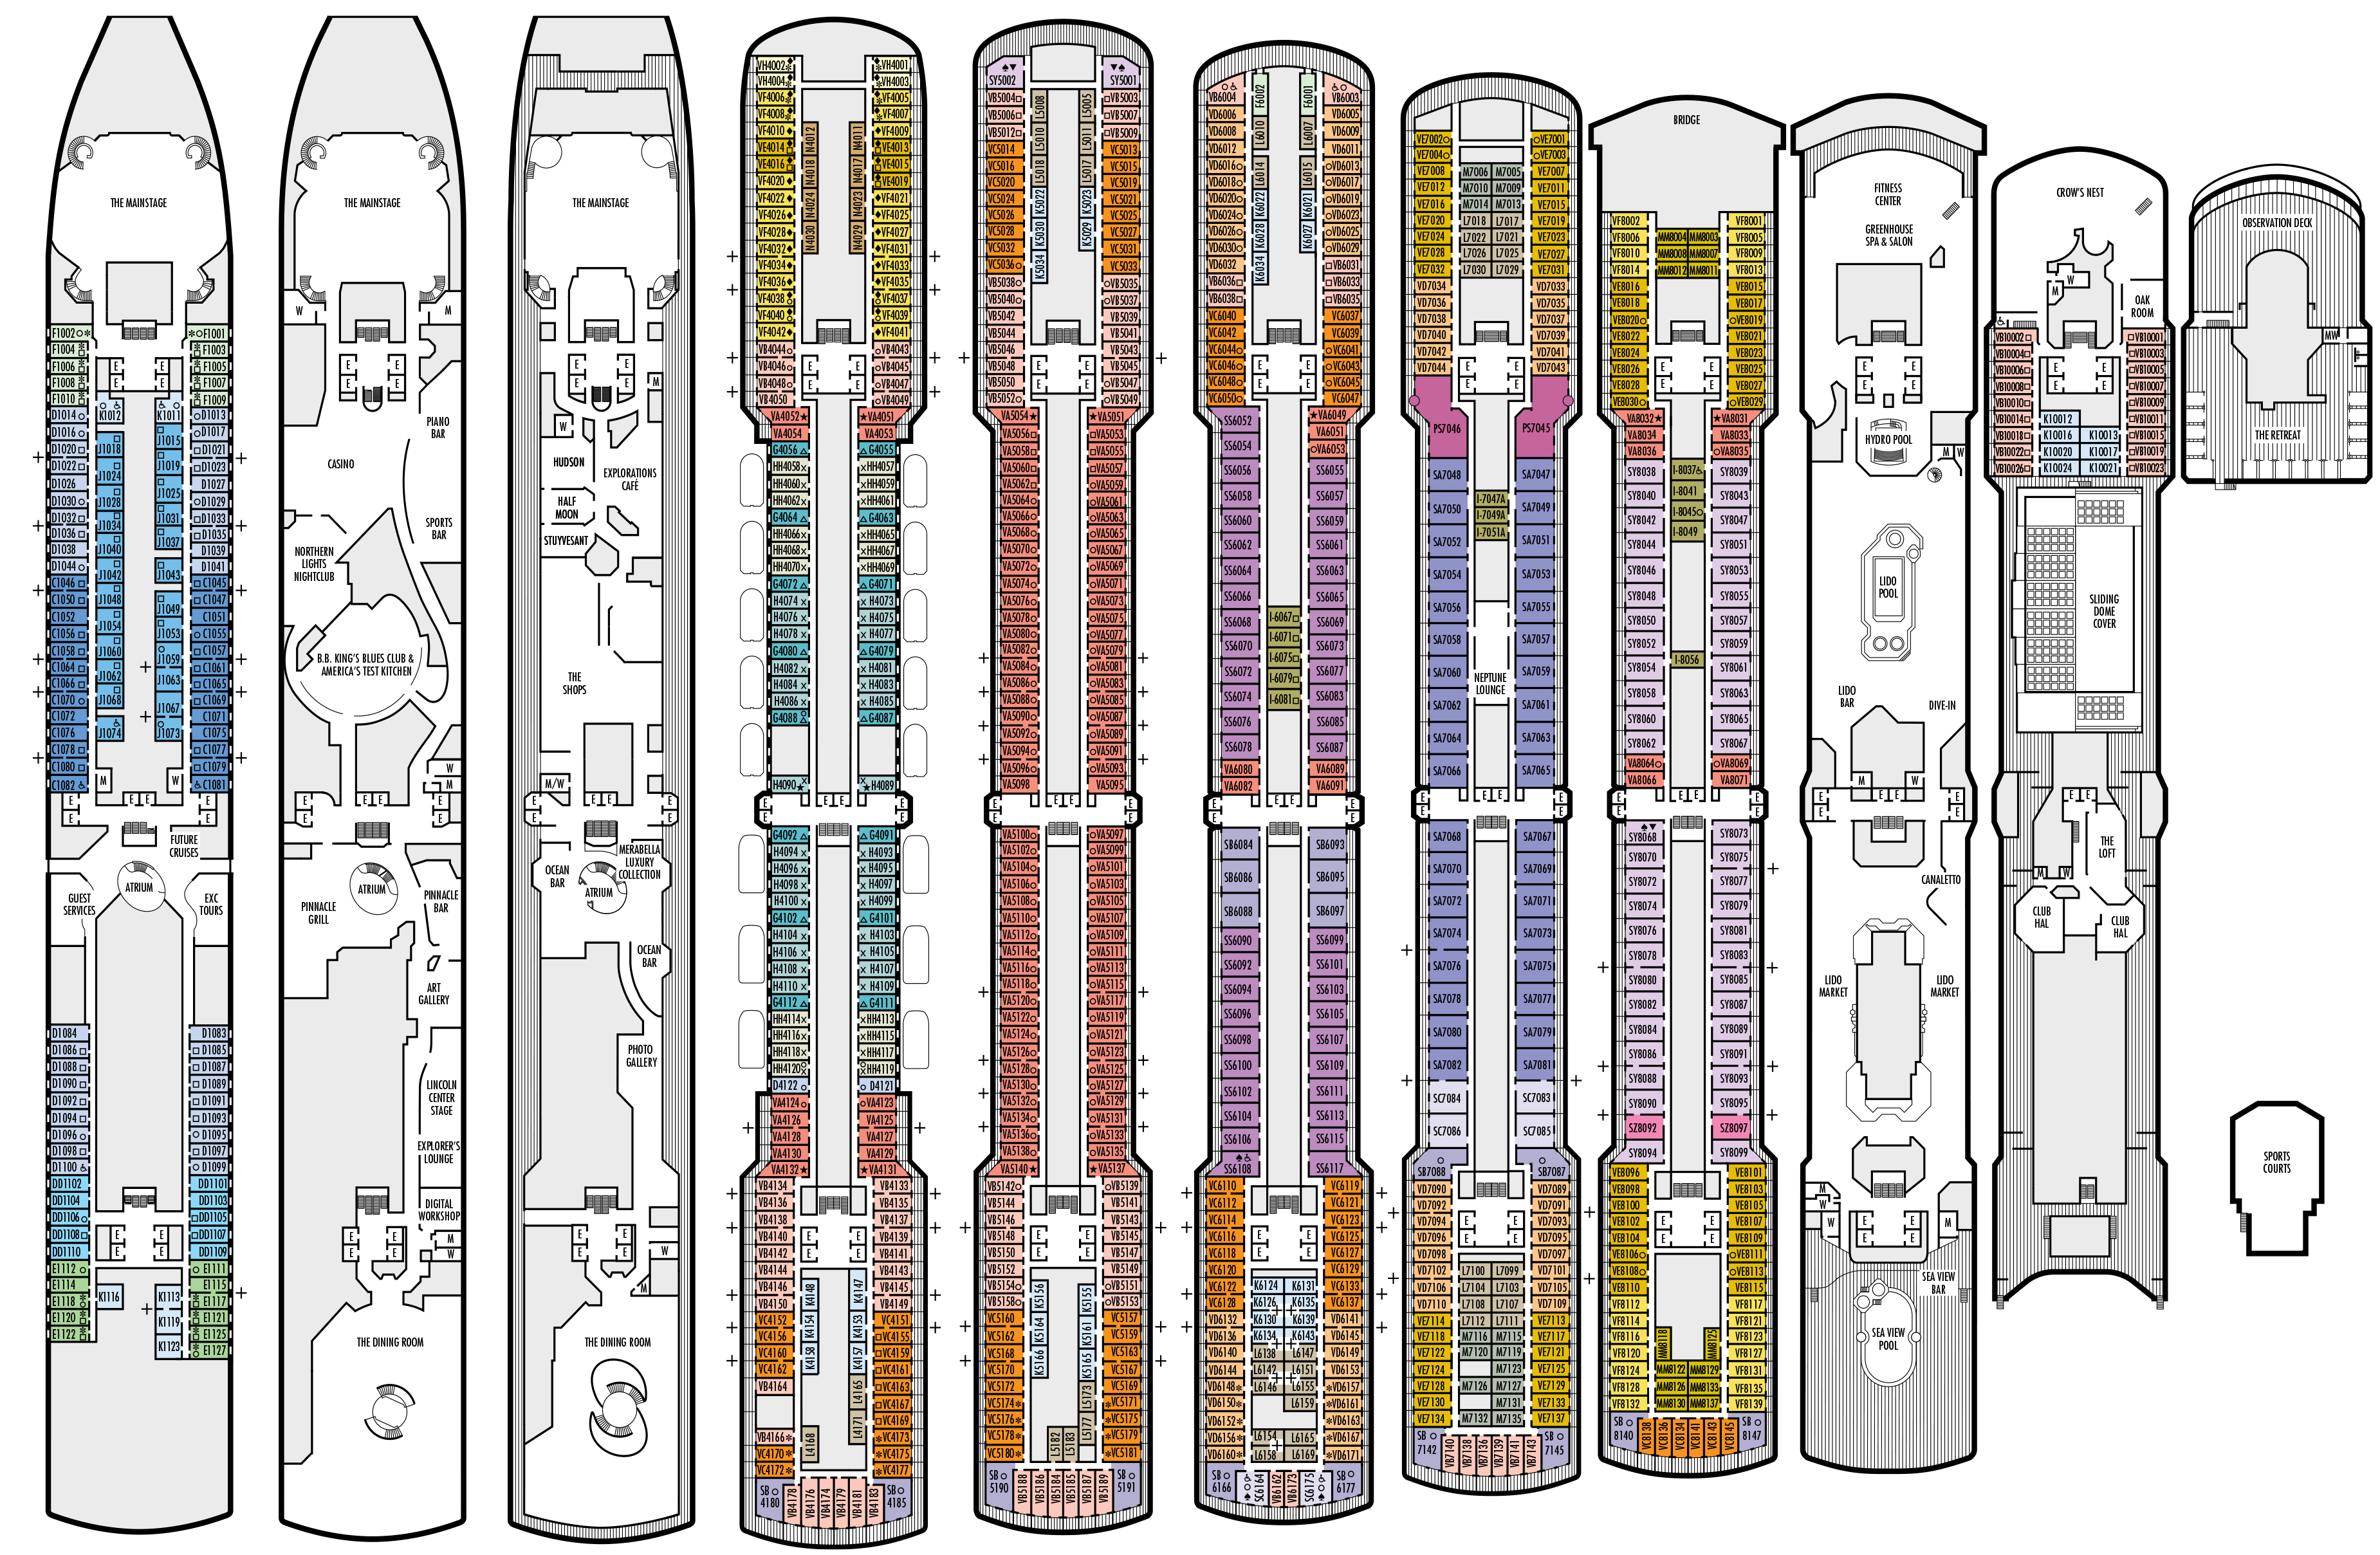 noordam cruise ship deck plan